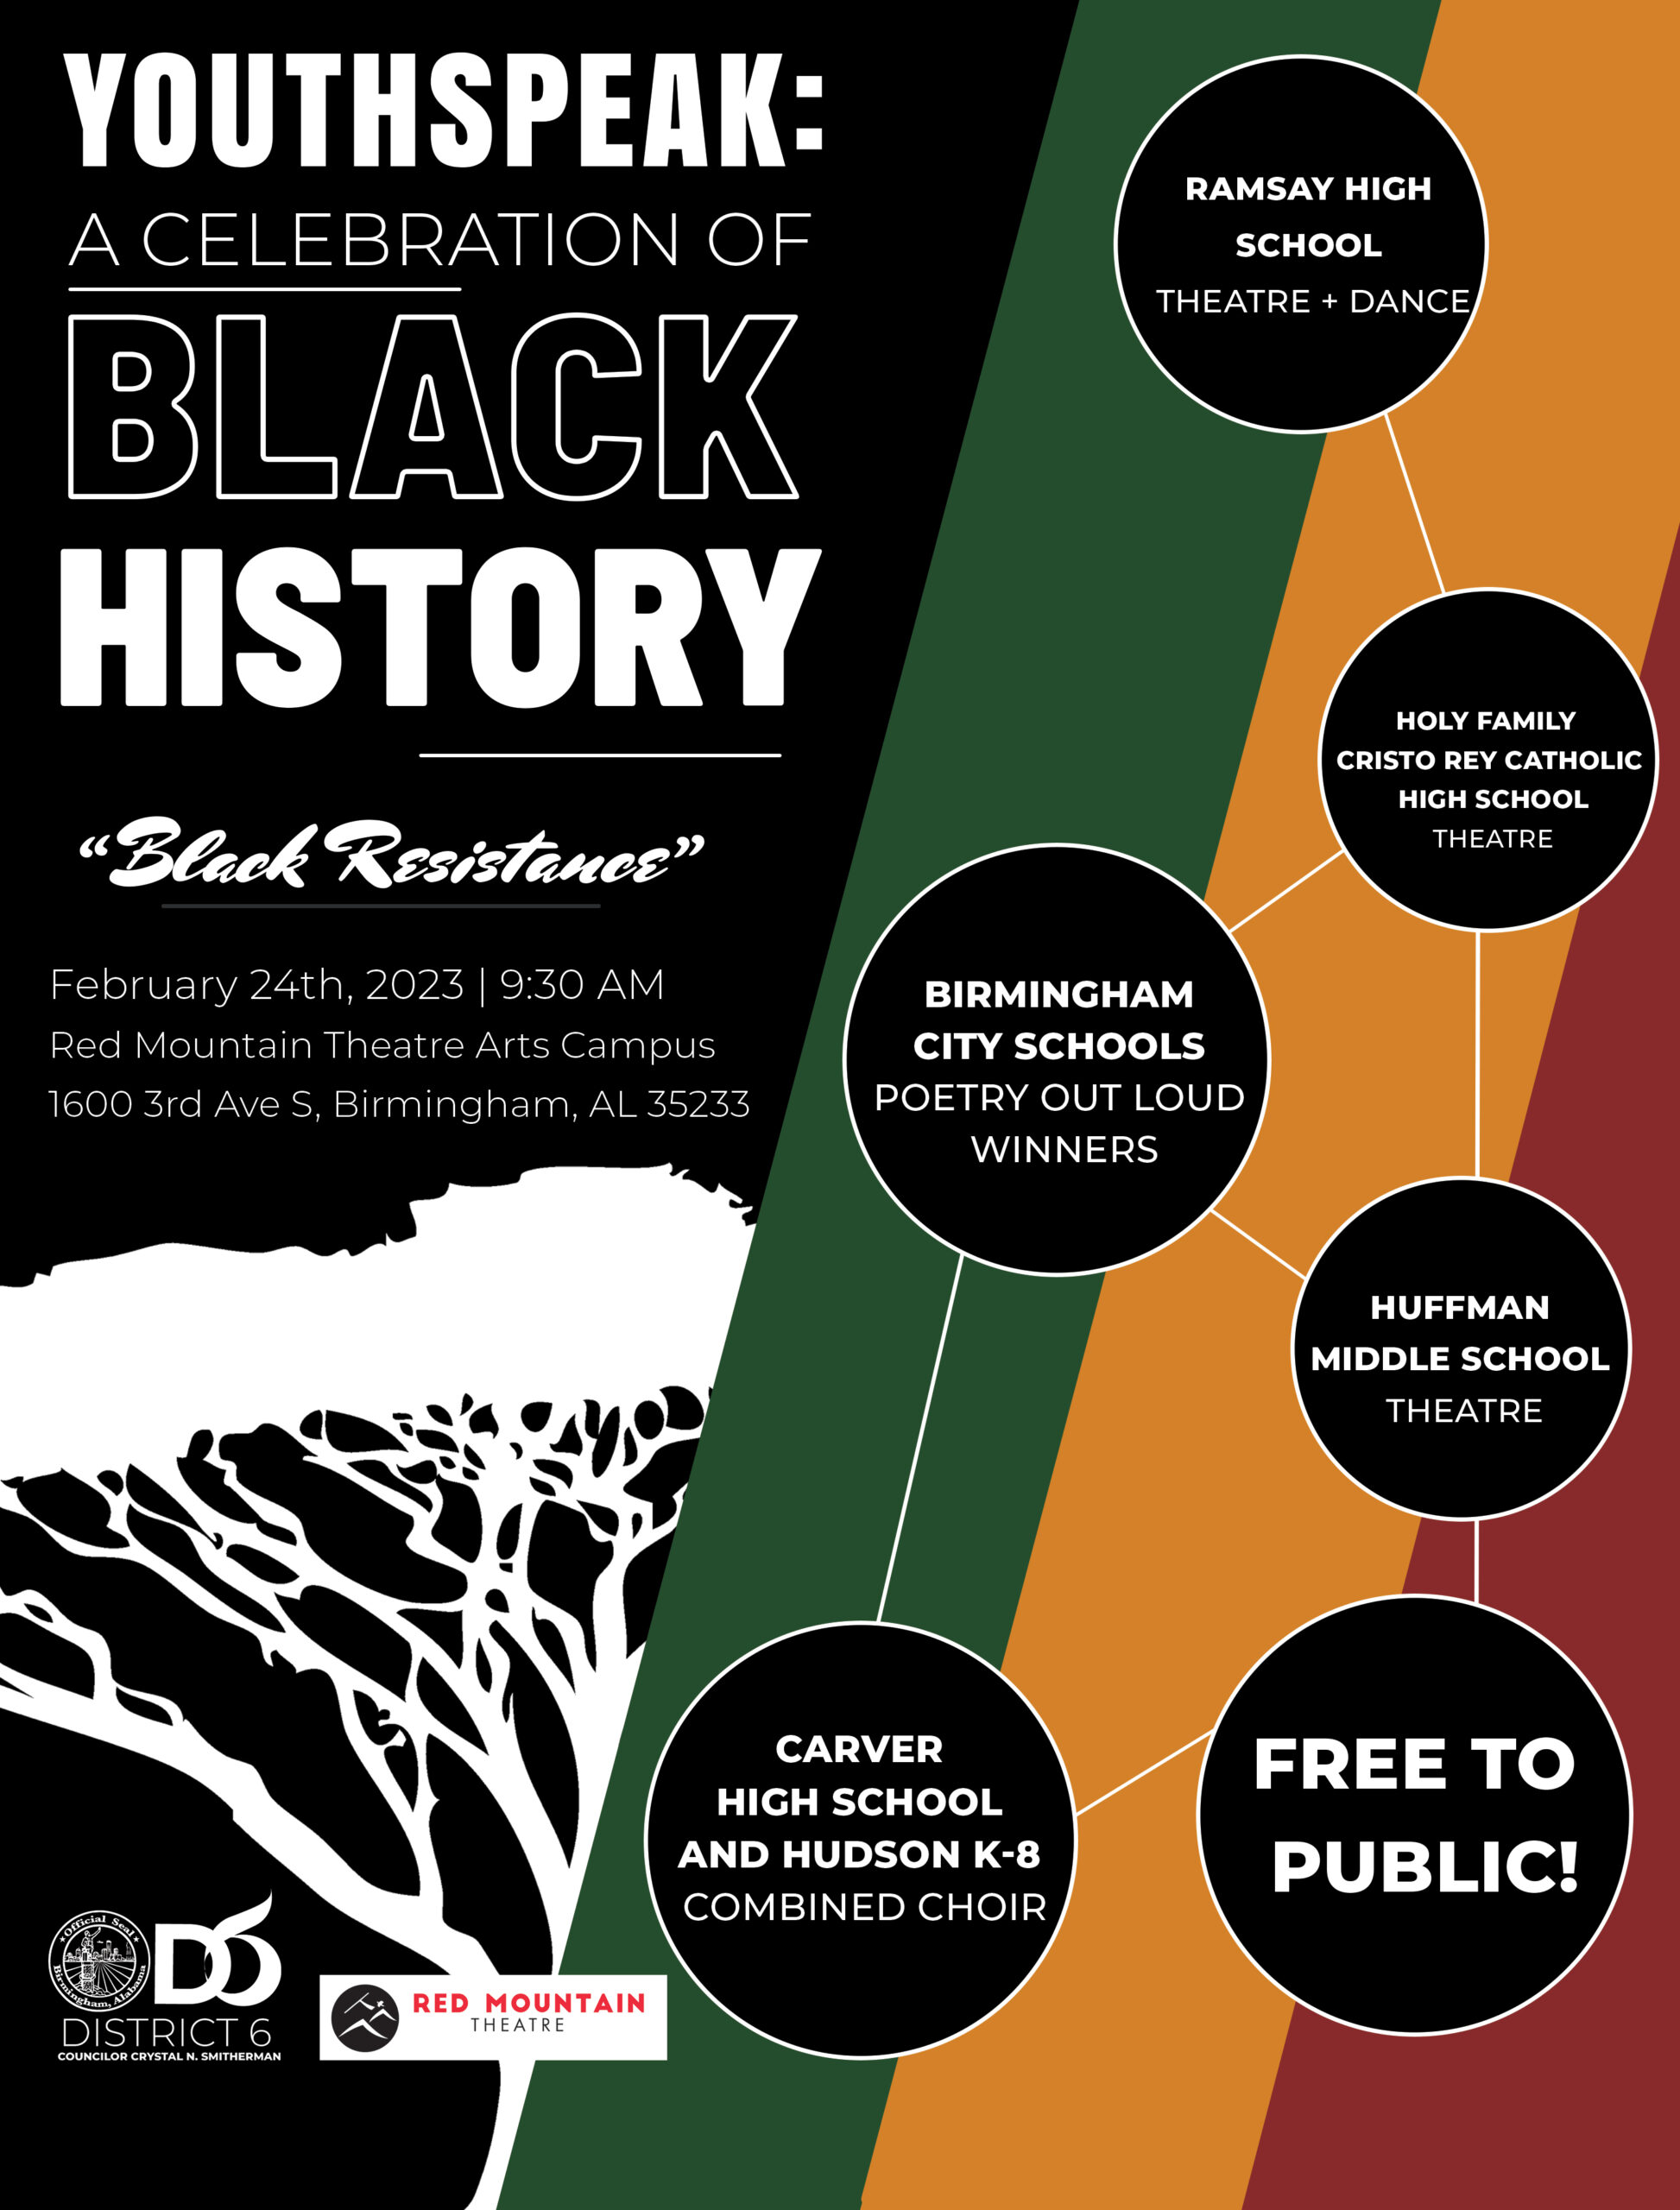 YOUTHSPEAK: A CELEBRATION OF BLACK HISTORY